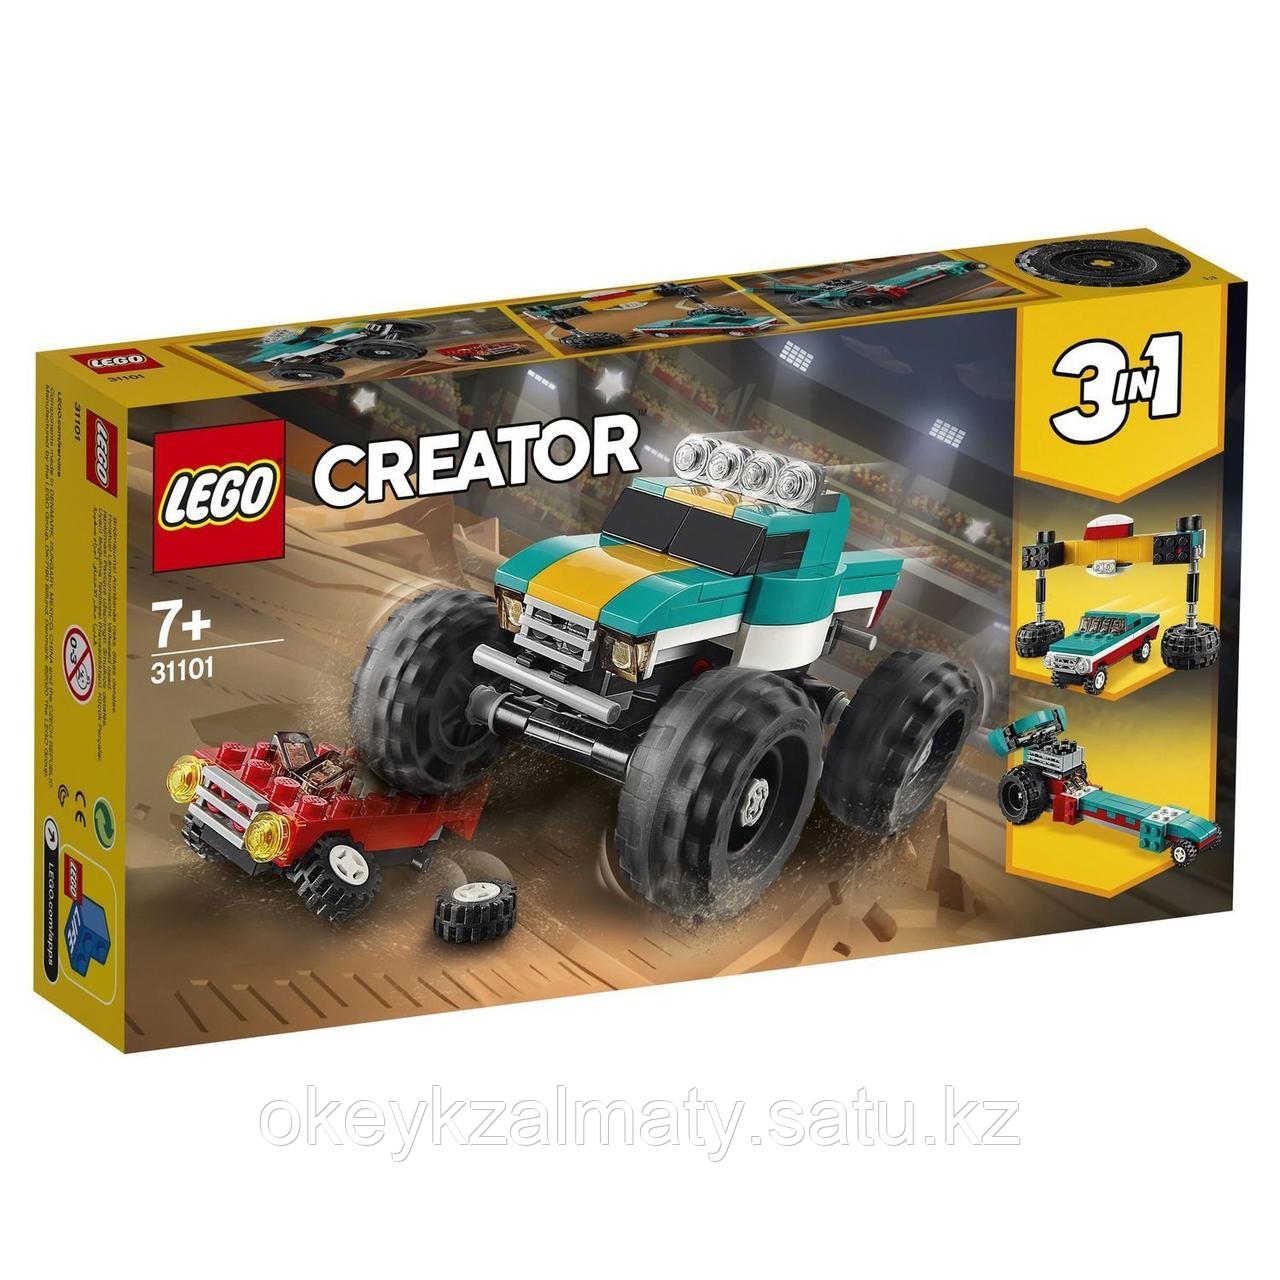 LEGO Creator: Монстр-трак 31101